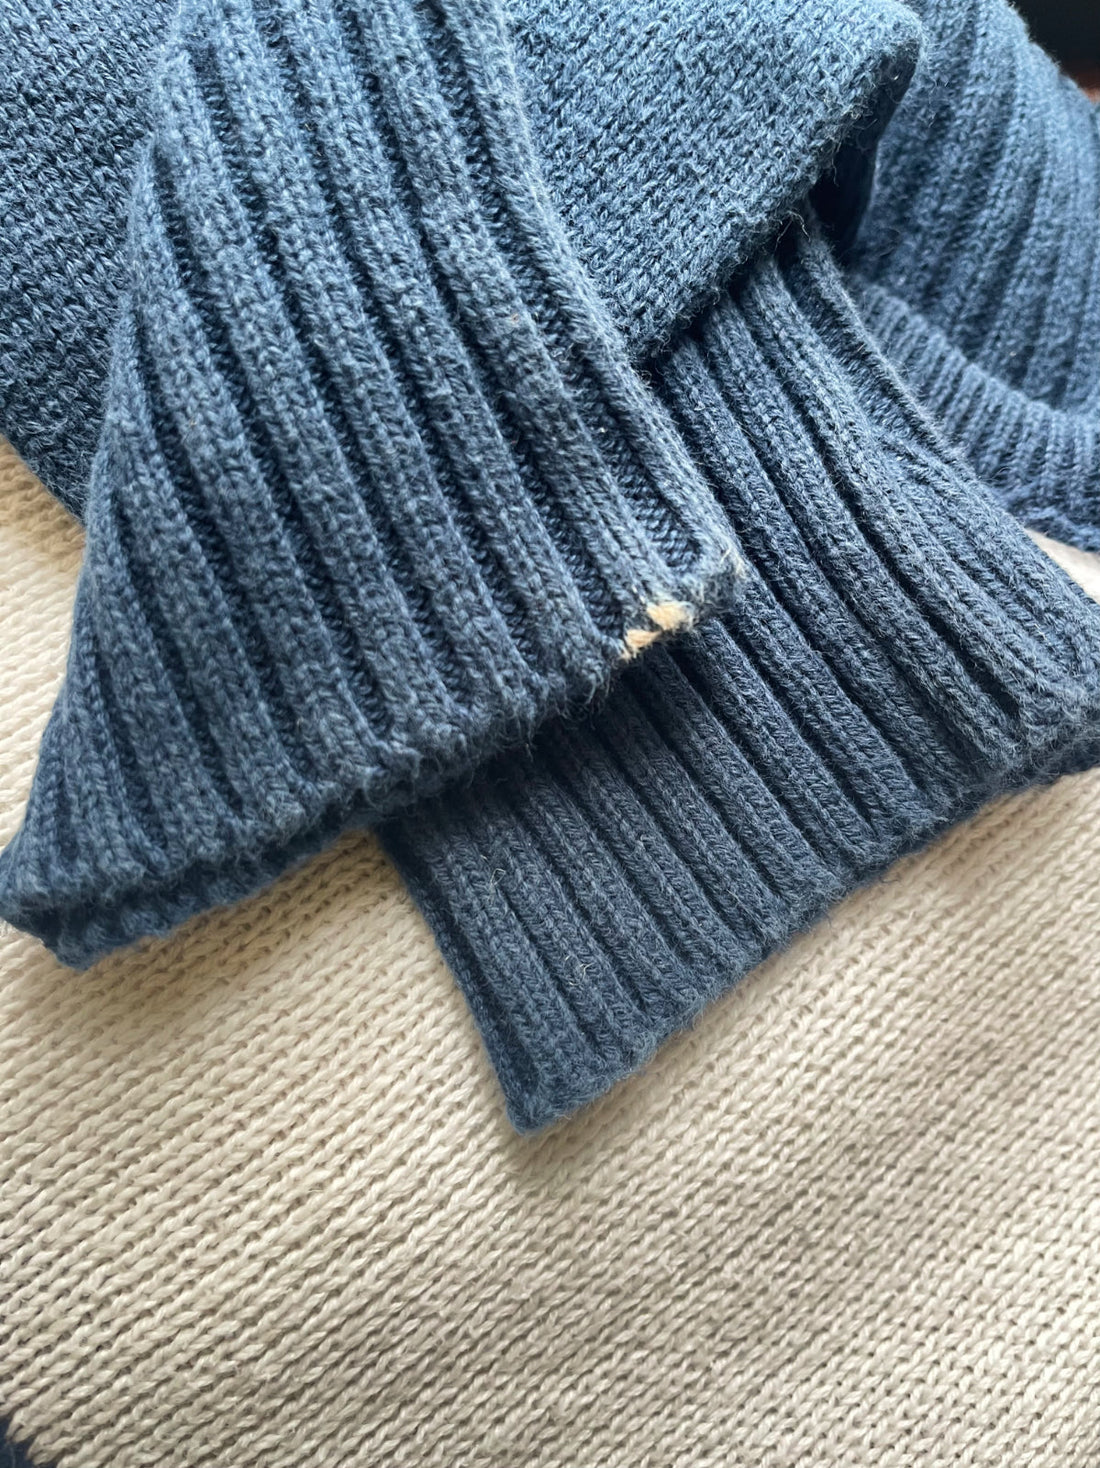 Vintage 84' Penn State Sweater-closiTherapi | vinTage